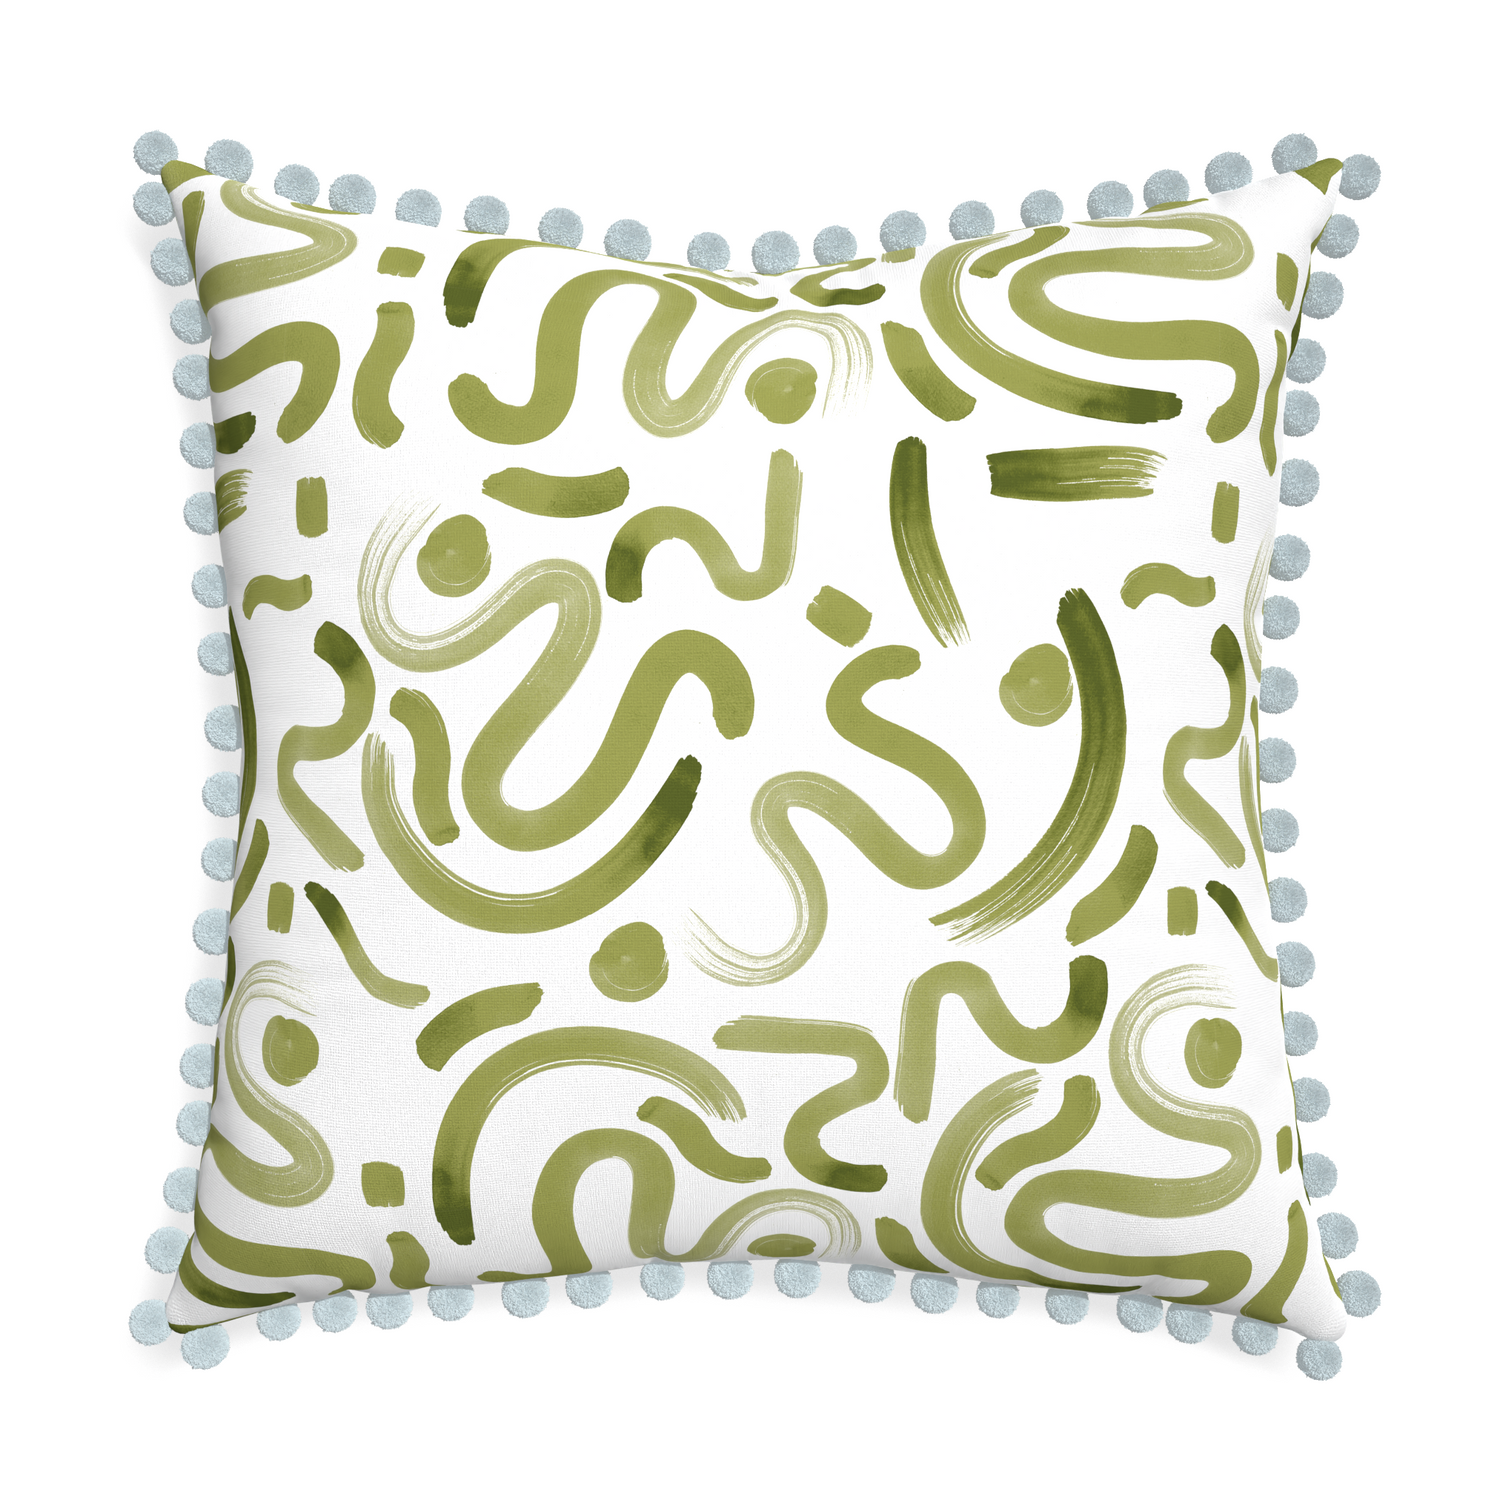 Euro-sham hockney moss custom pillow with powder pom pom on white background